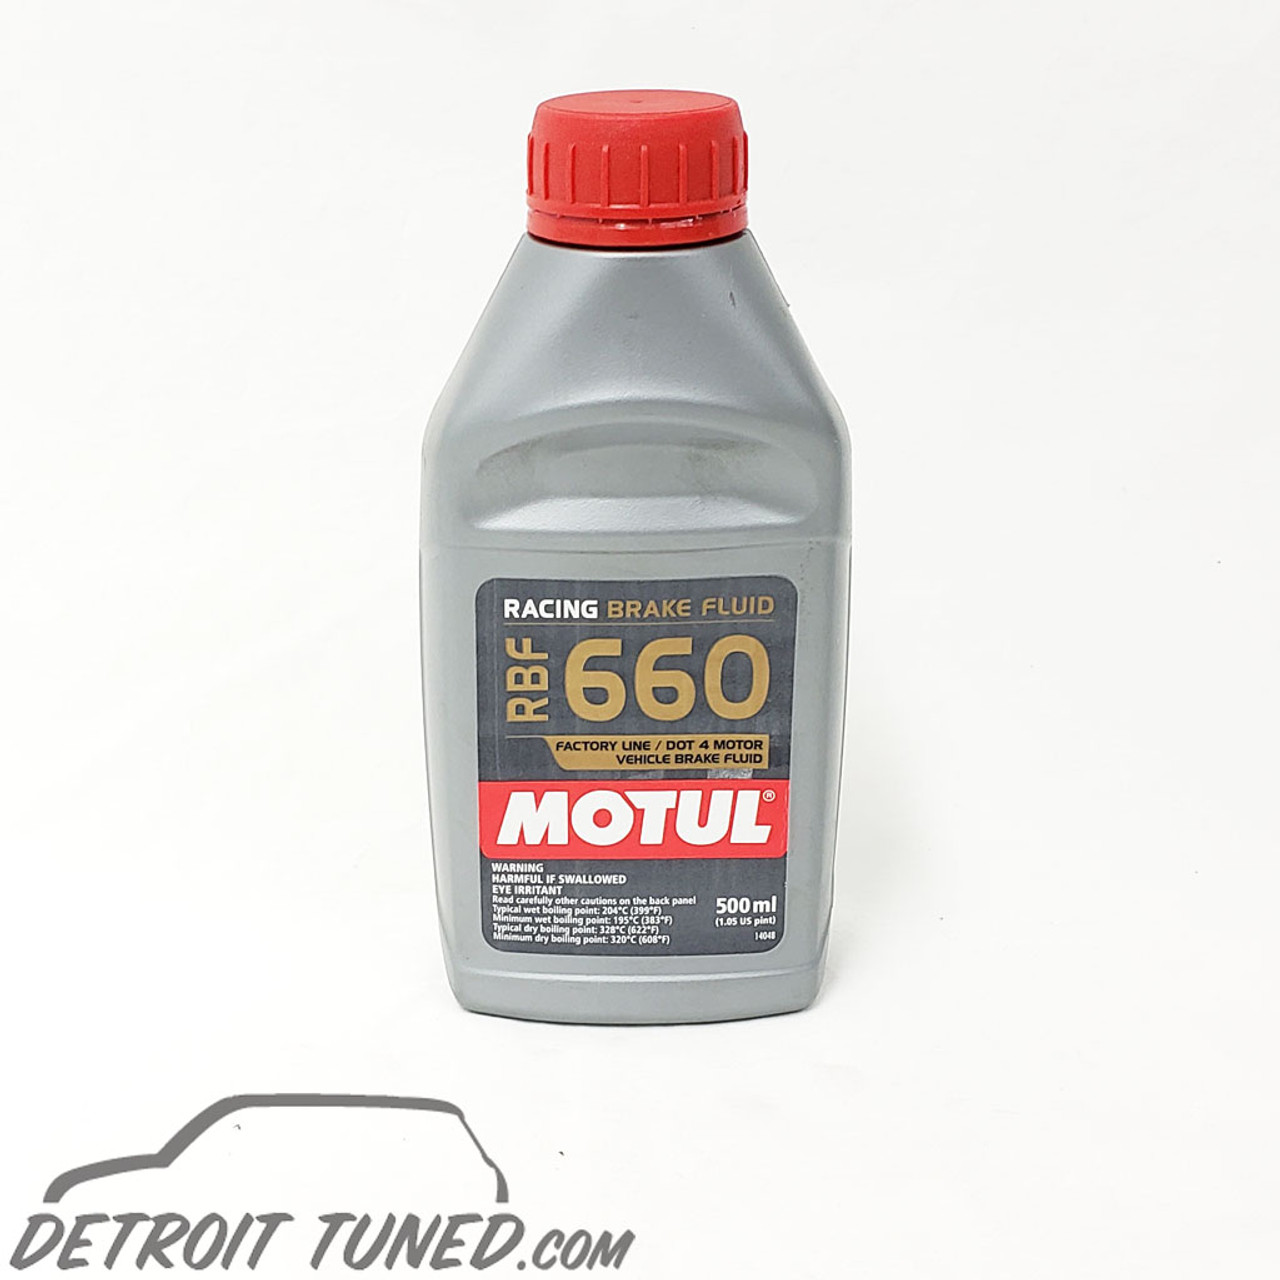 Motul RBF 660 Racing Brake Fluid - 500ml